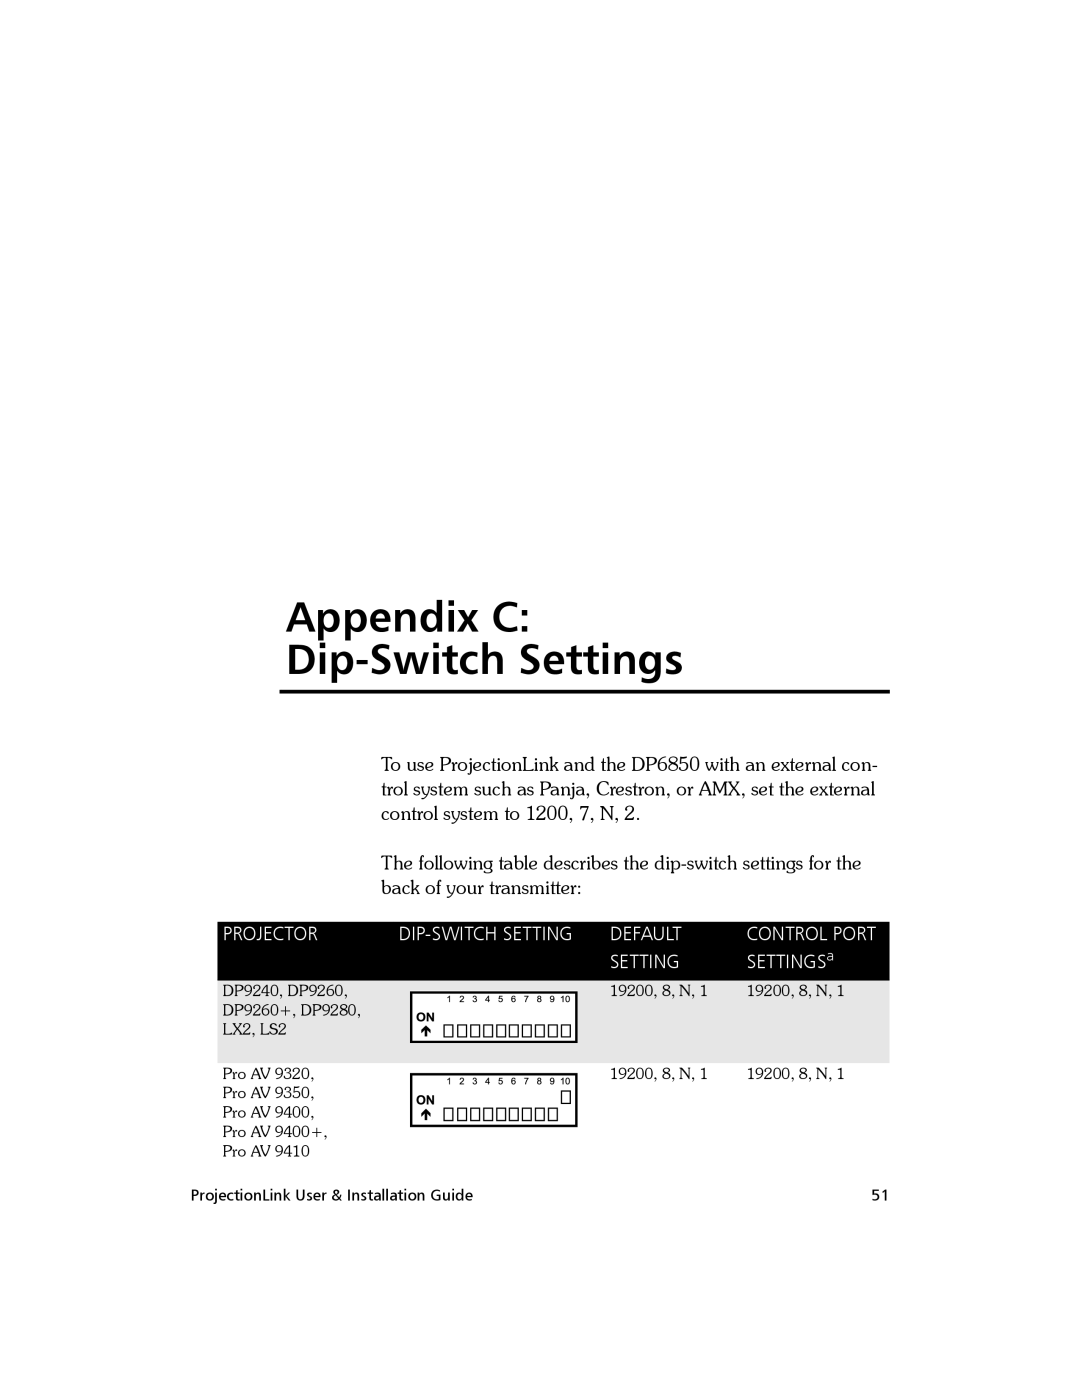 Proxima ASA PL-300E, BNDL-001 manual Appendix C Dip-Switch Settings, Projector, Default, SETTINGSa 